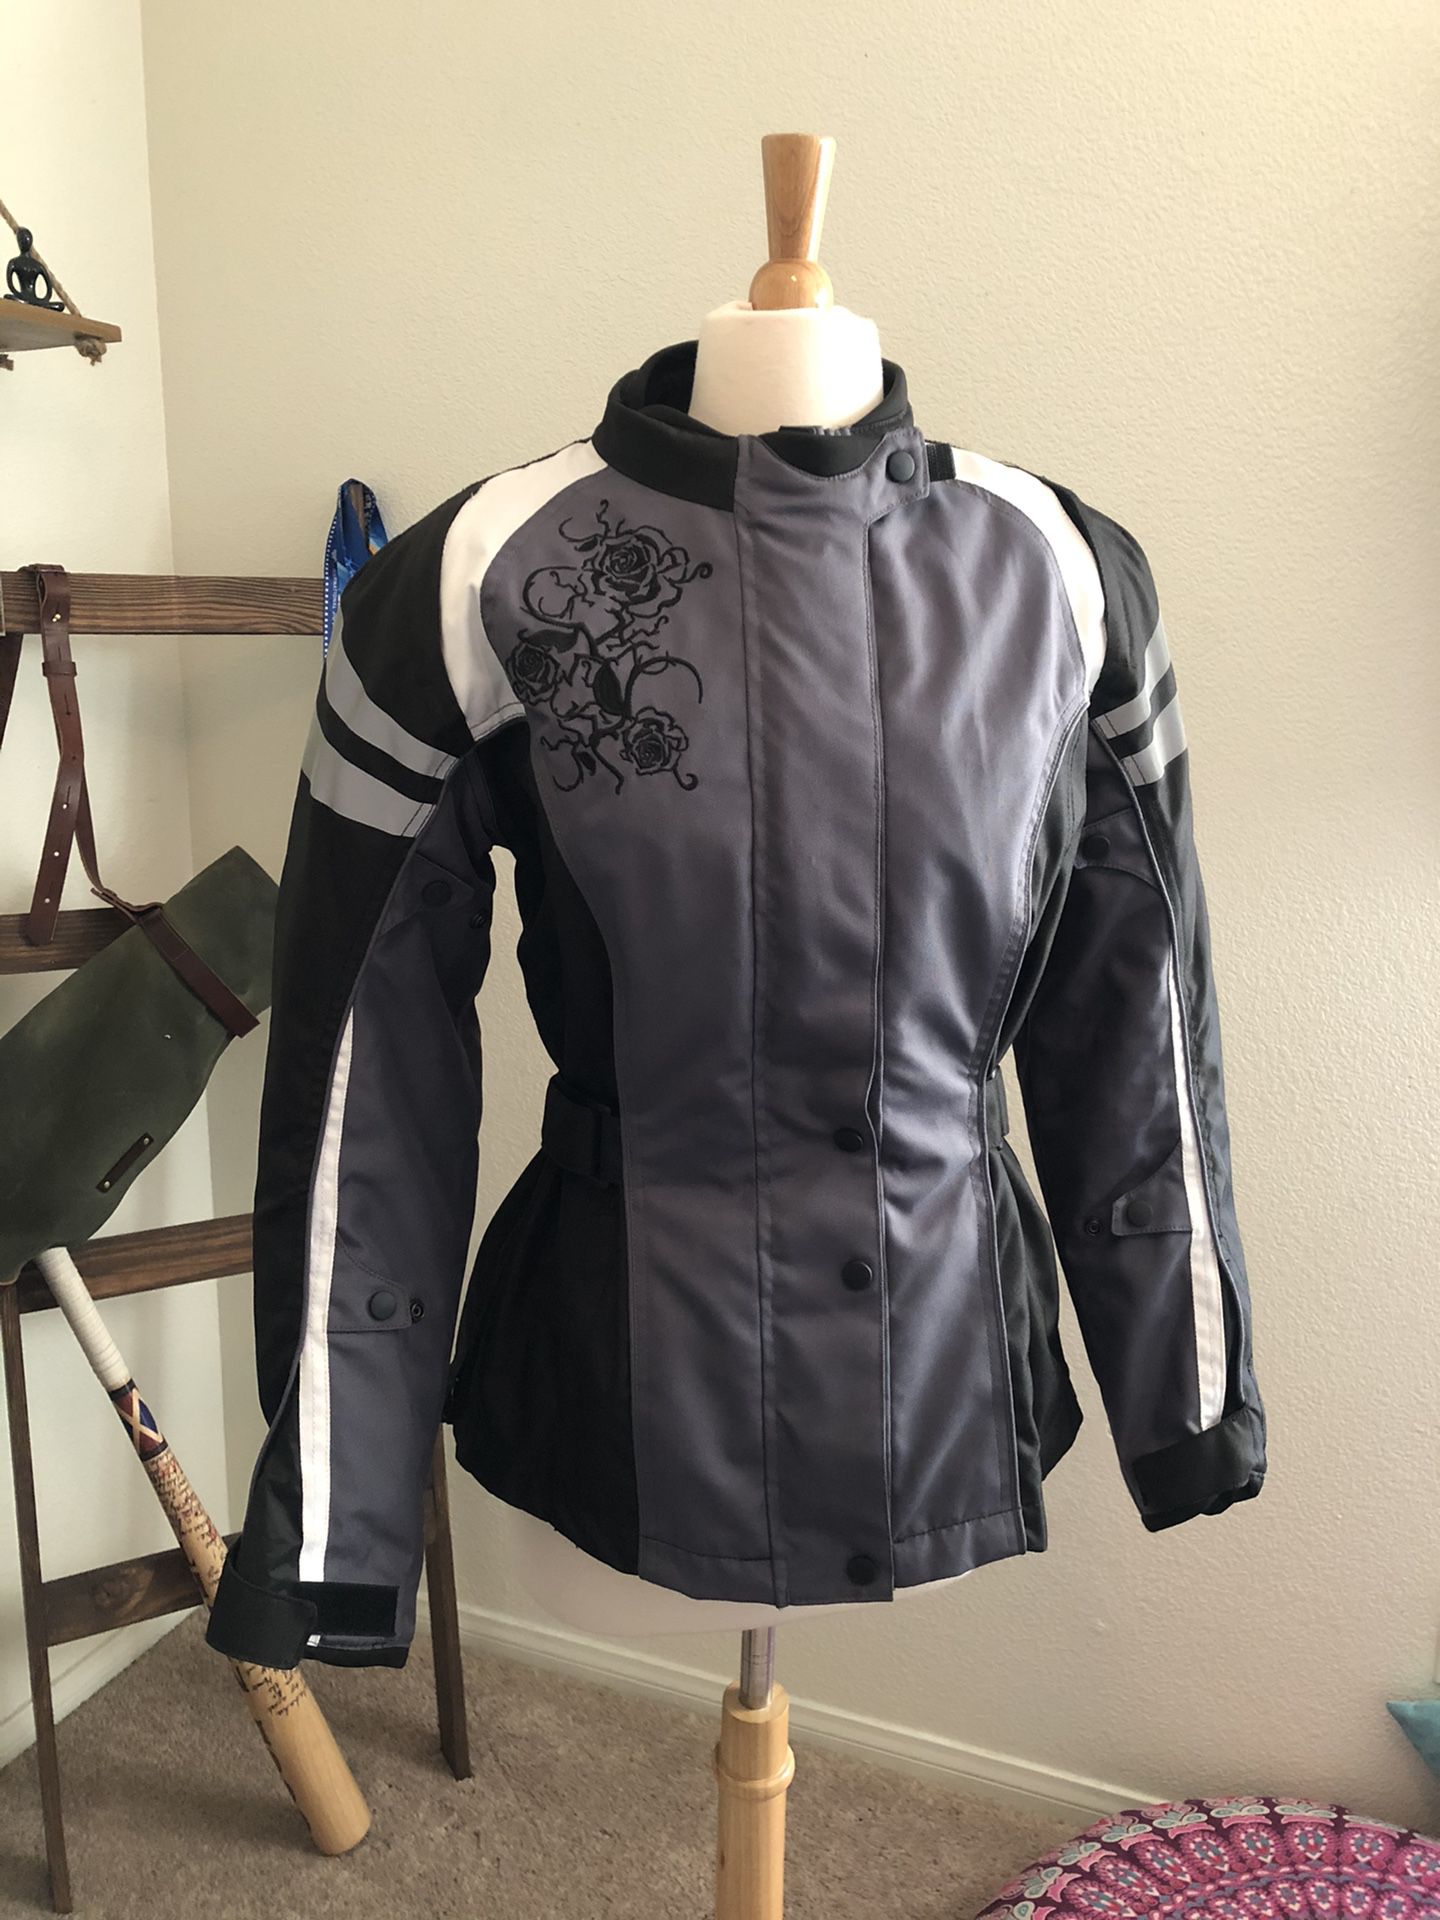 Women’s BILT Motorcycle Jacket